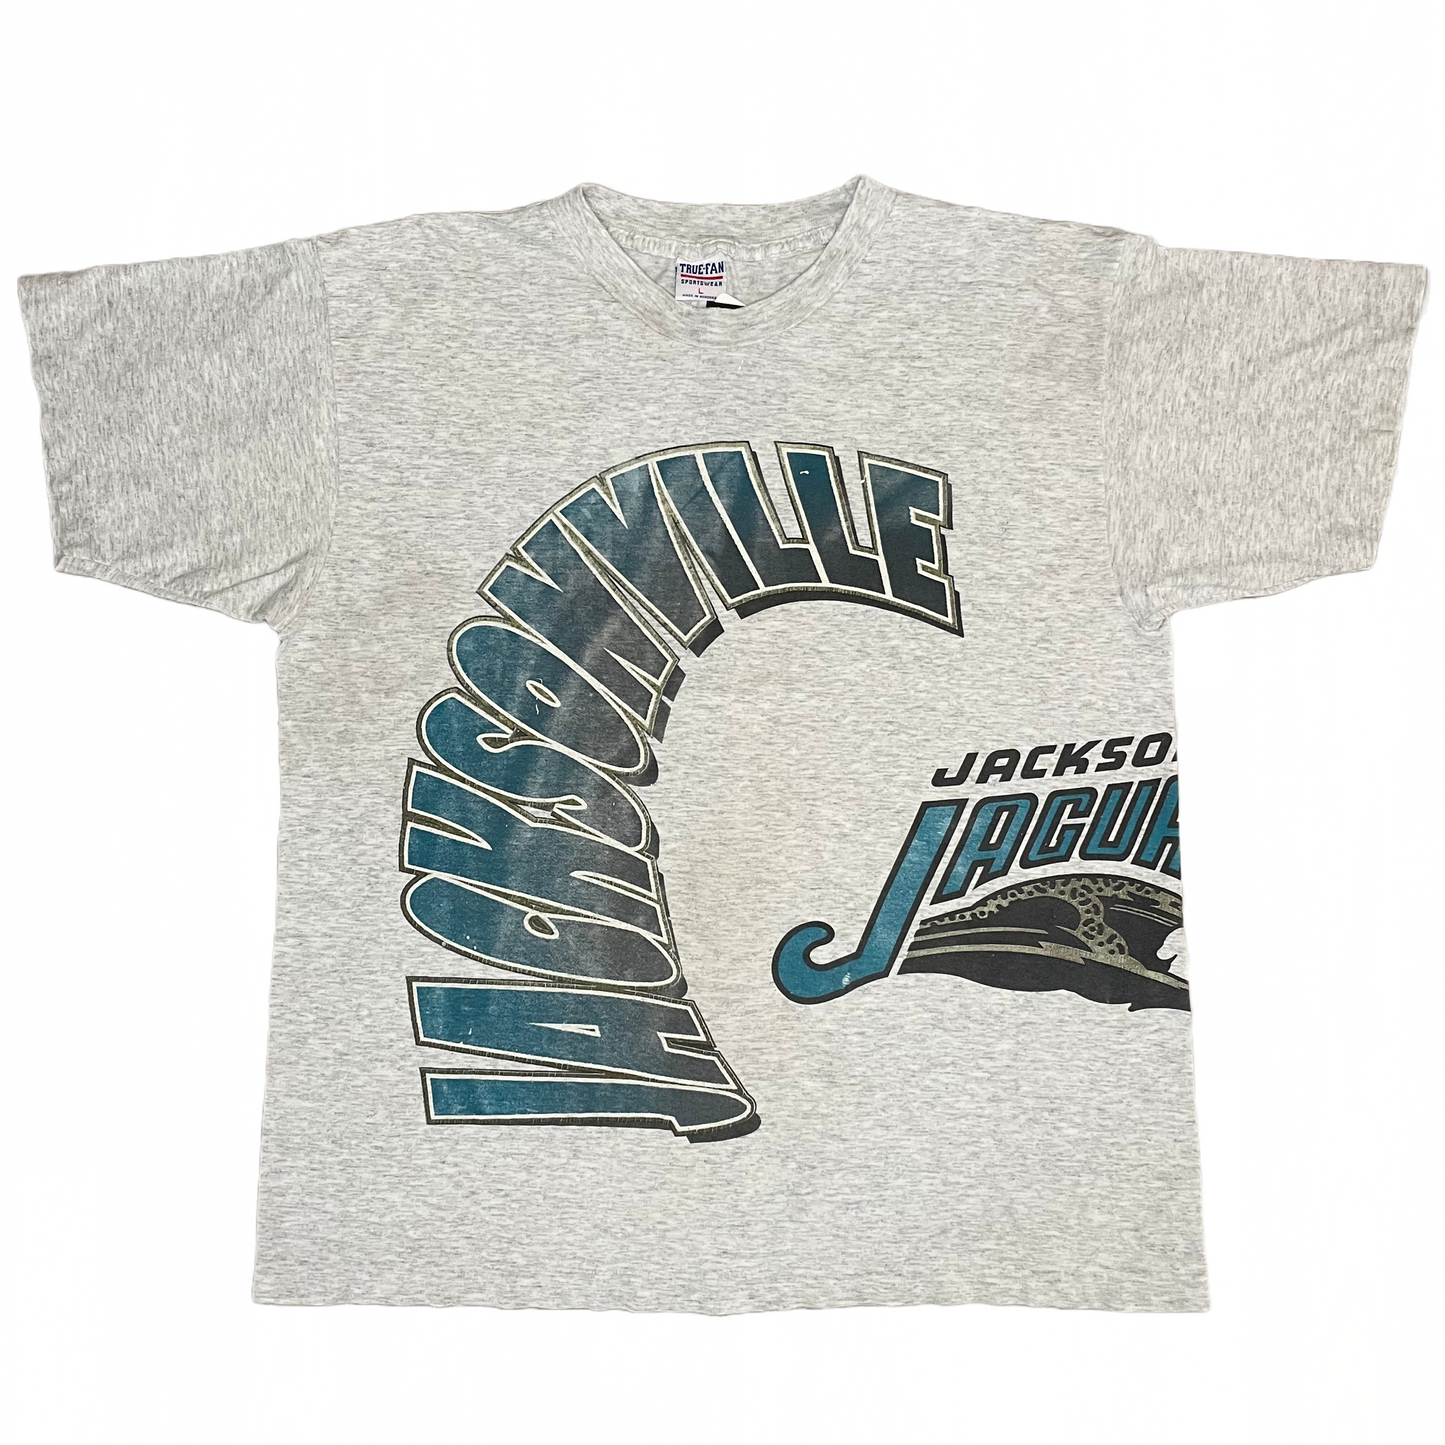 Jacksonville Jaguars banned logo wrap around shirt